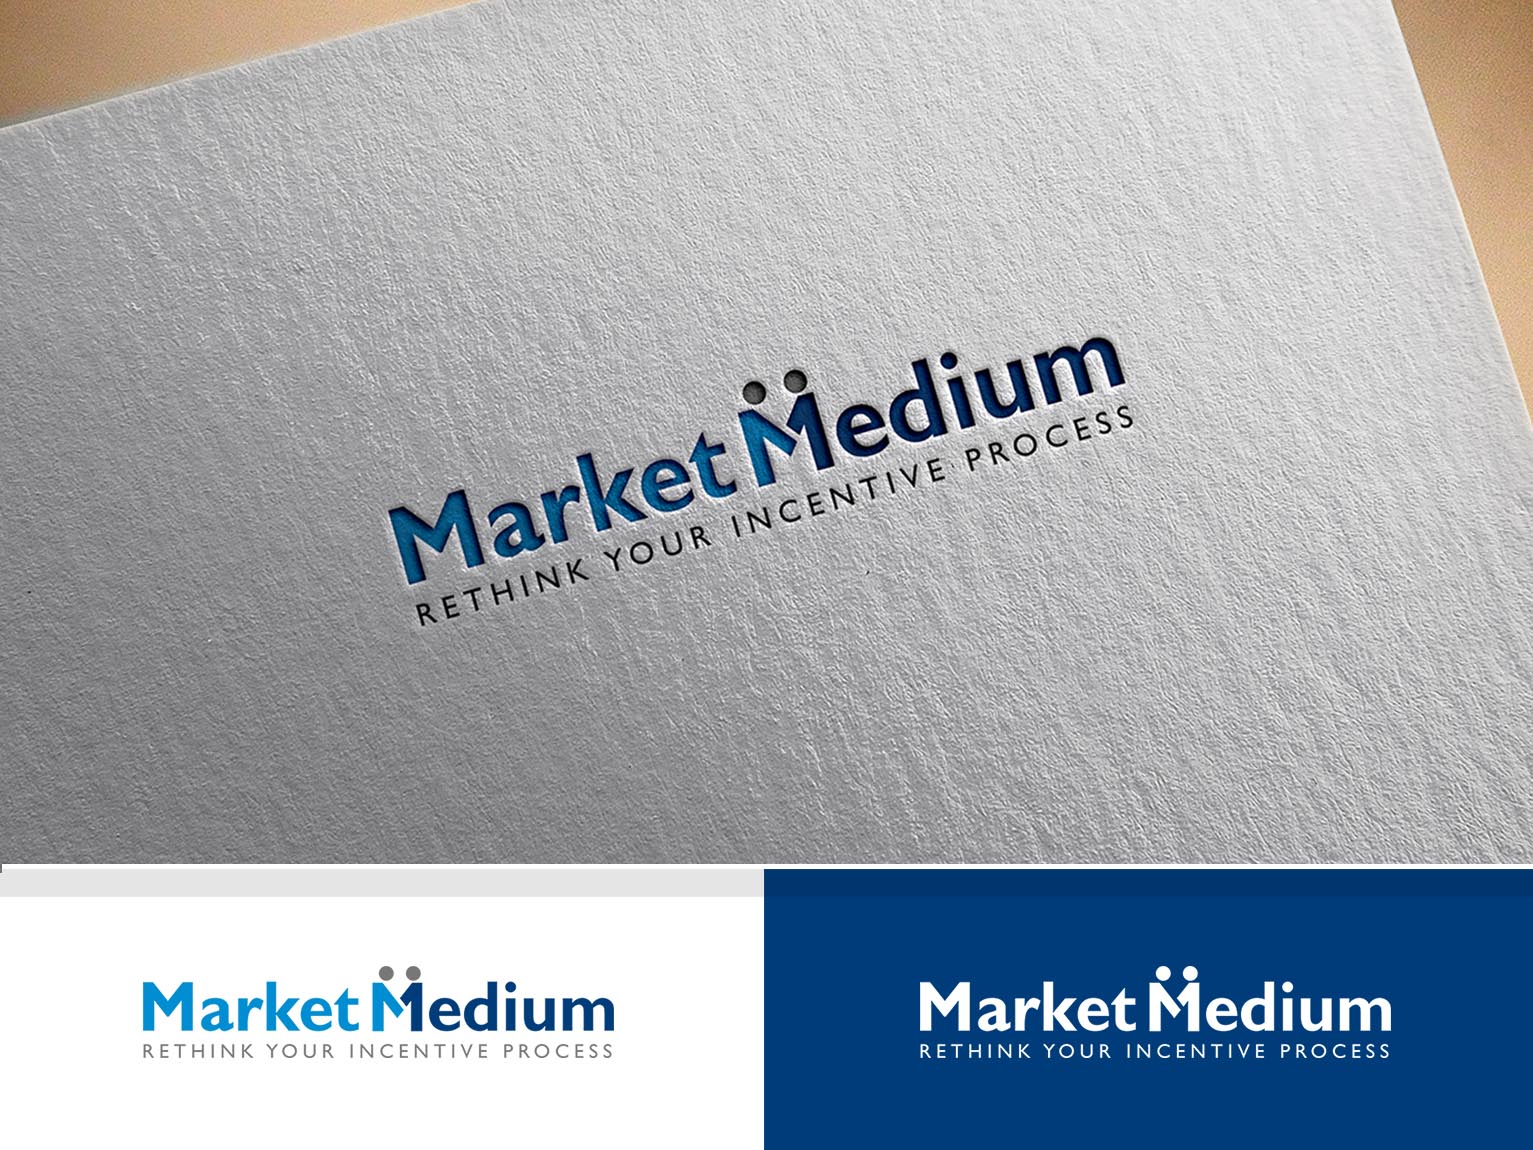 Logo Design Entry 1637164 submitted by Prabhu86 to the contest for MarketMedium run by tomlyn.mathews@effiser.com